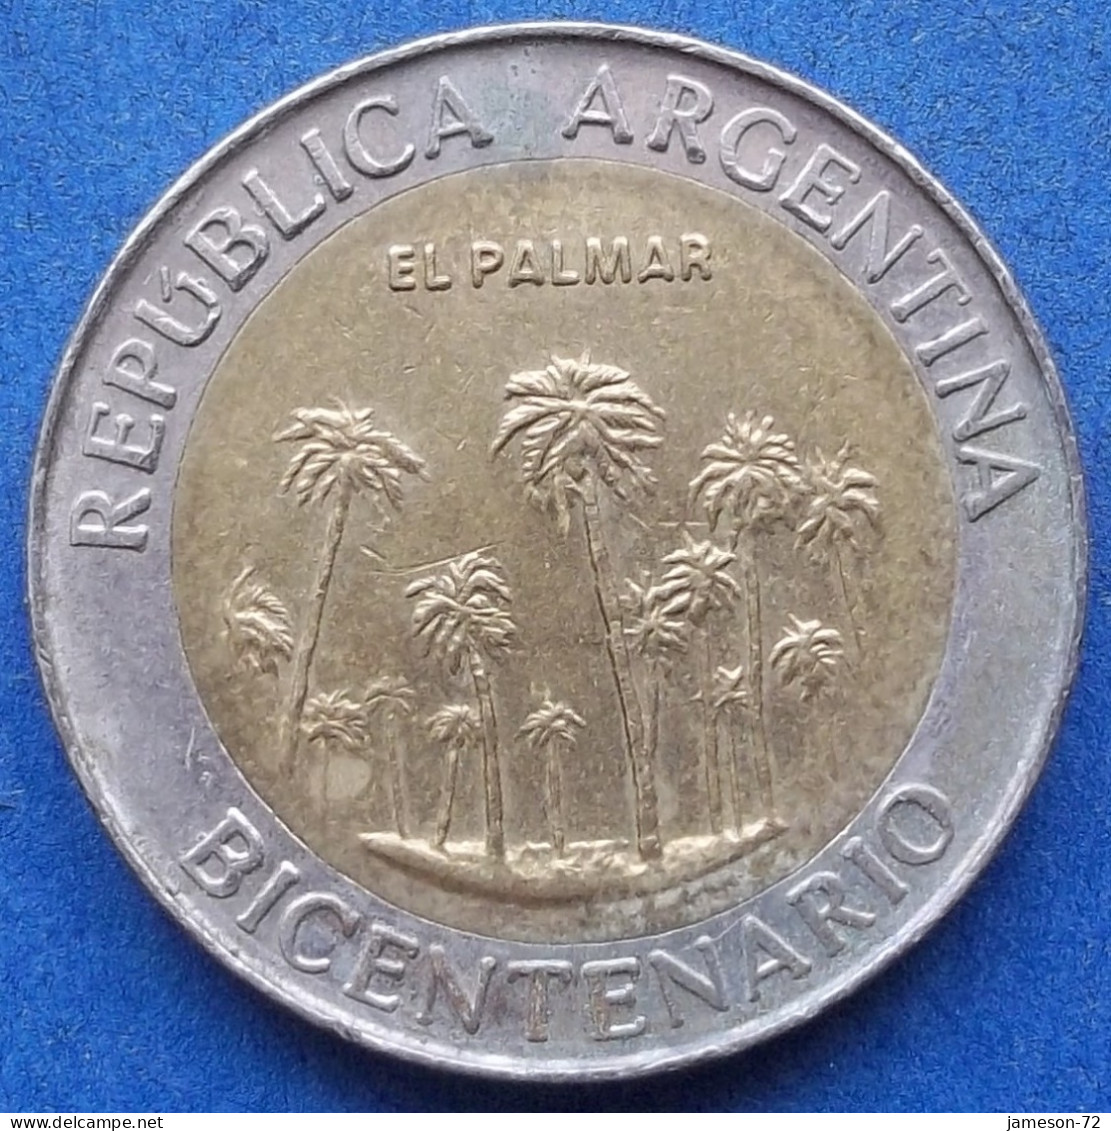 ARGENTINA - 1 Peso 2010 "El Palmar" KM# 156 Monetary Reform (1992) - Edelweiss Coins - Argentina